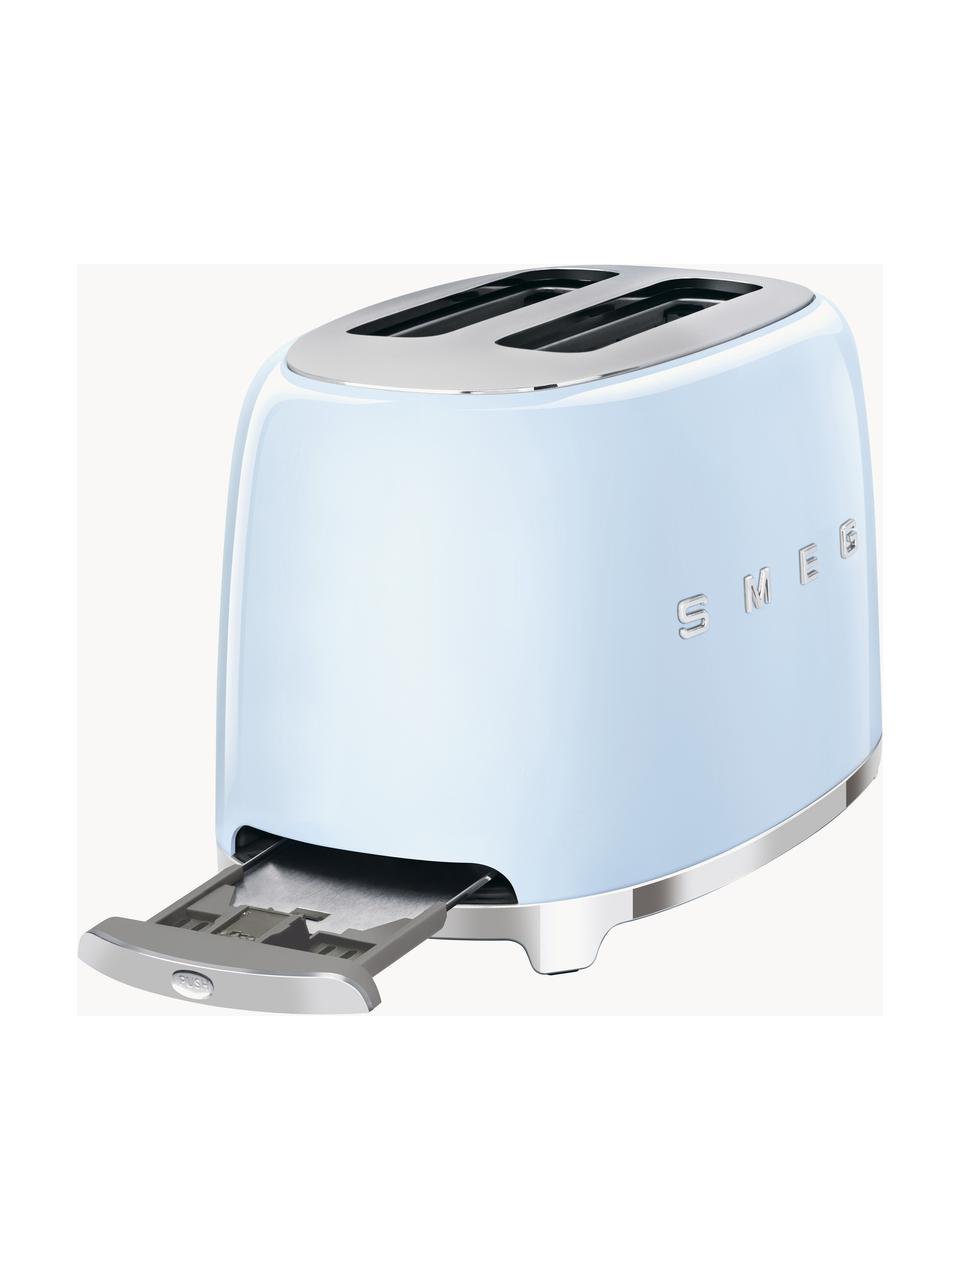 Kompakt Toaster 50's Style, Edelstahl, lackiert, Hellblau, glänzend, B 31 x T 20 cm